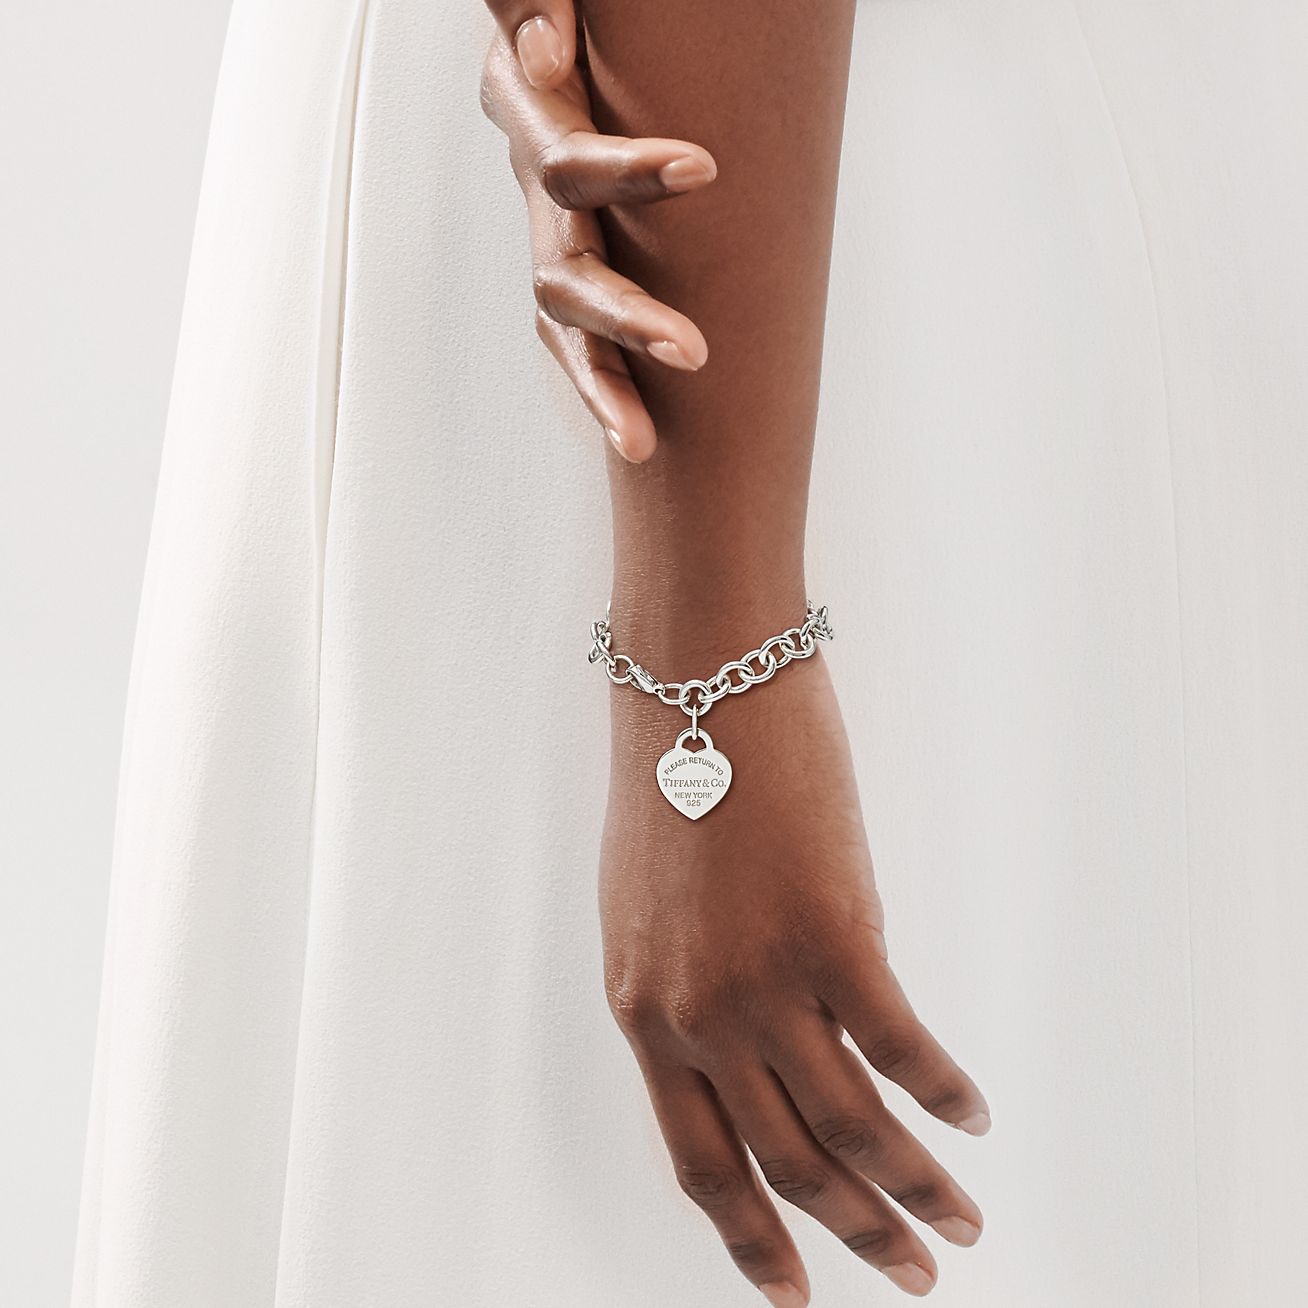 Silver Charm Bracelet  Classy Women Collection